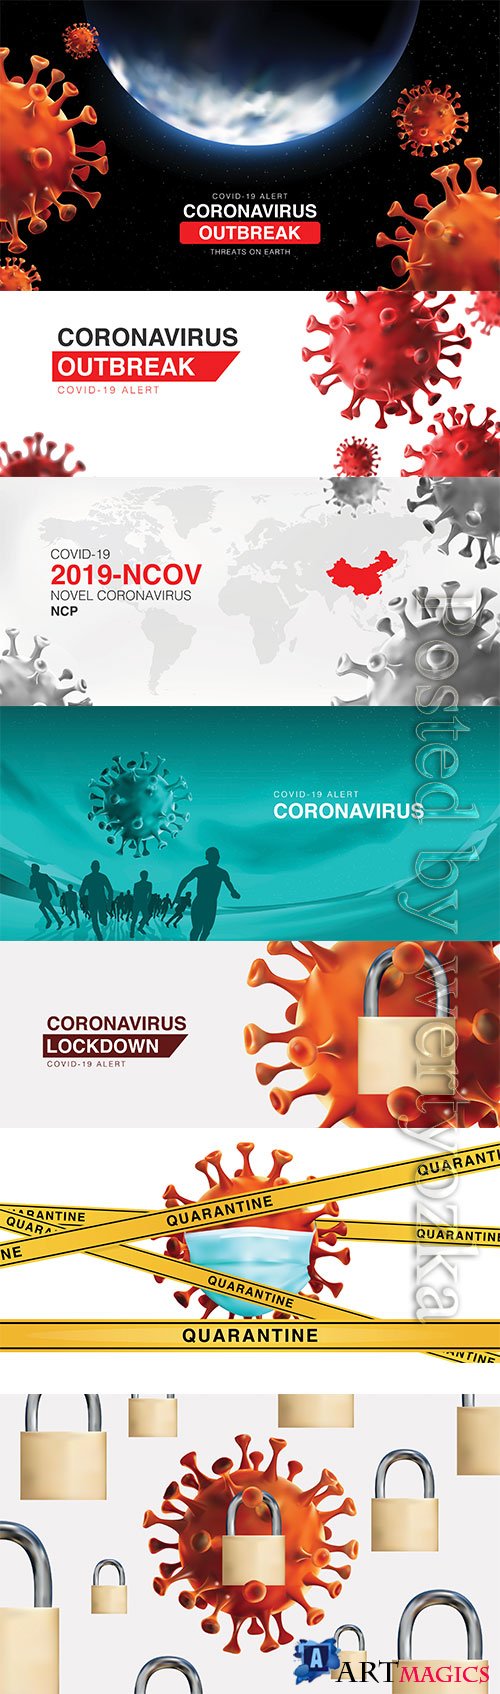 Isolated 3D Realistic illustration of Novel coronavirus cell 2019-nCoV